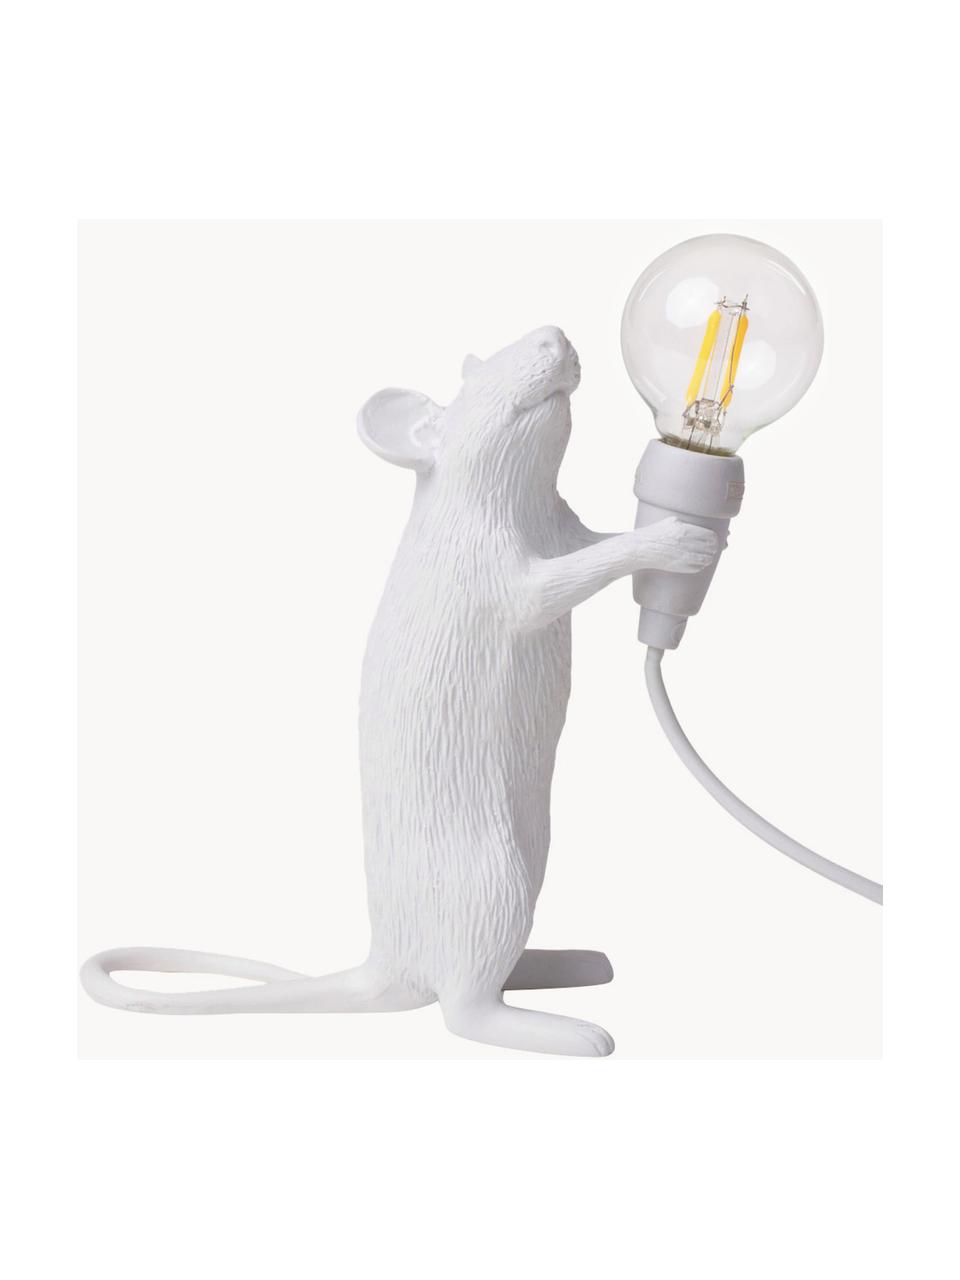 Petite lampe à poser LED design Souris, Blanc, larg. 13 x haut. 15 cm